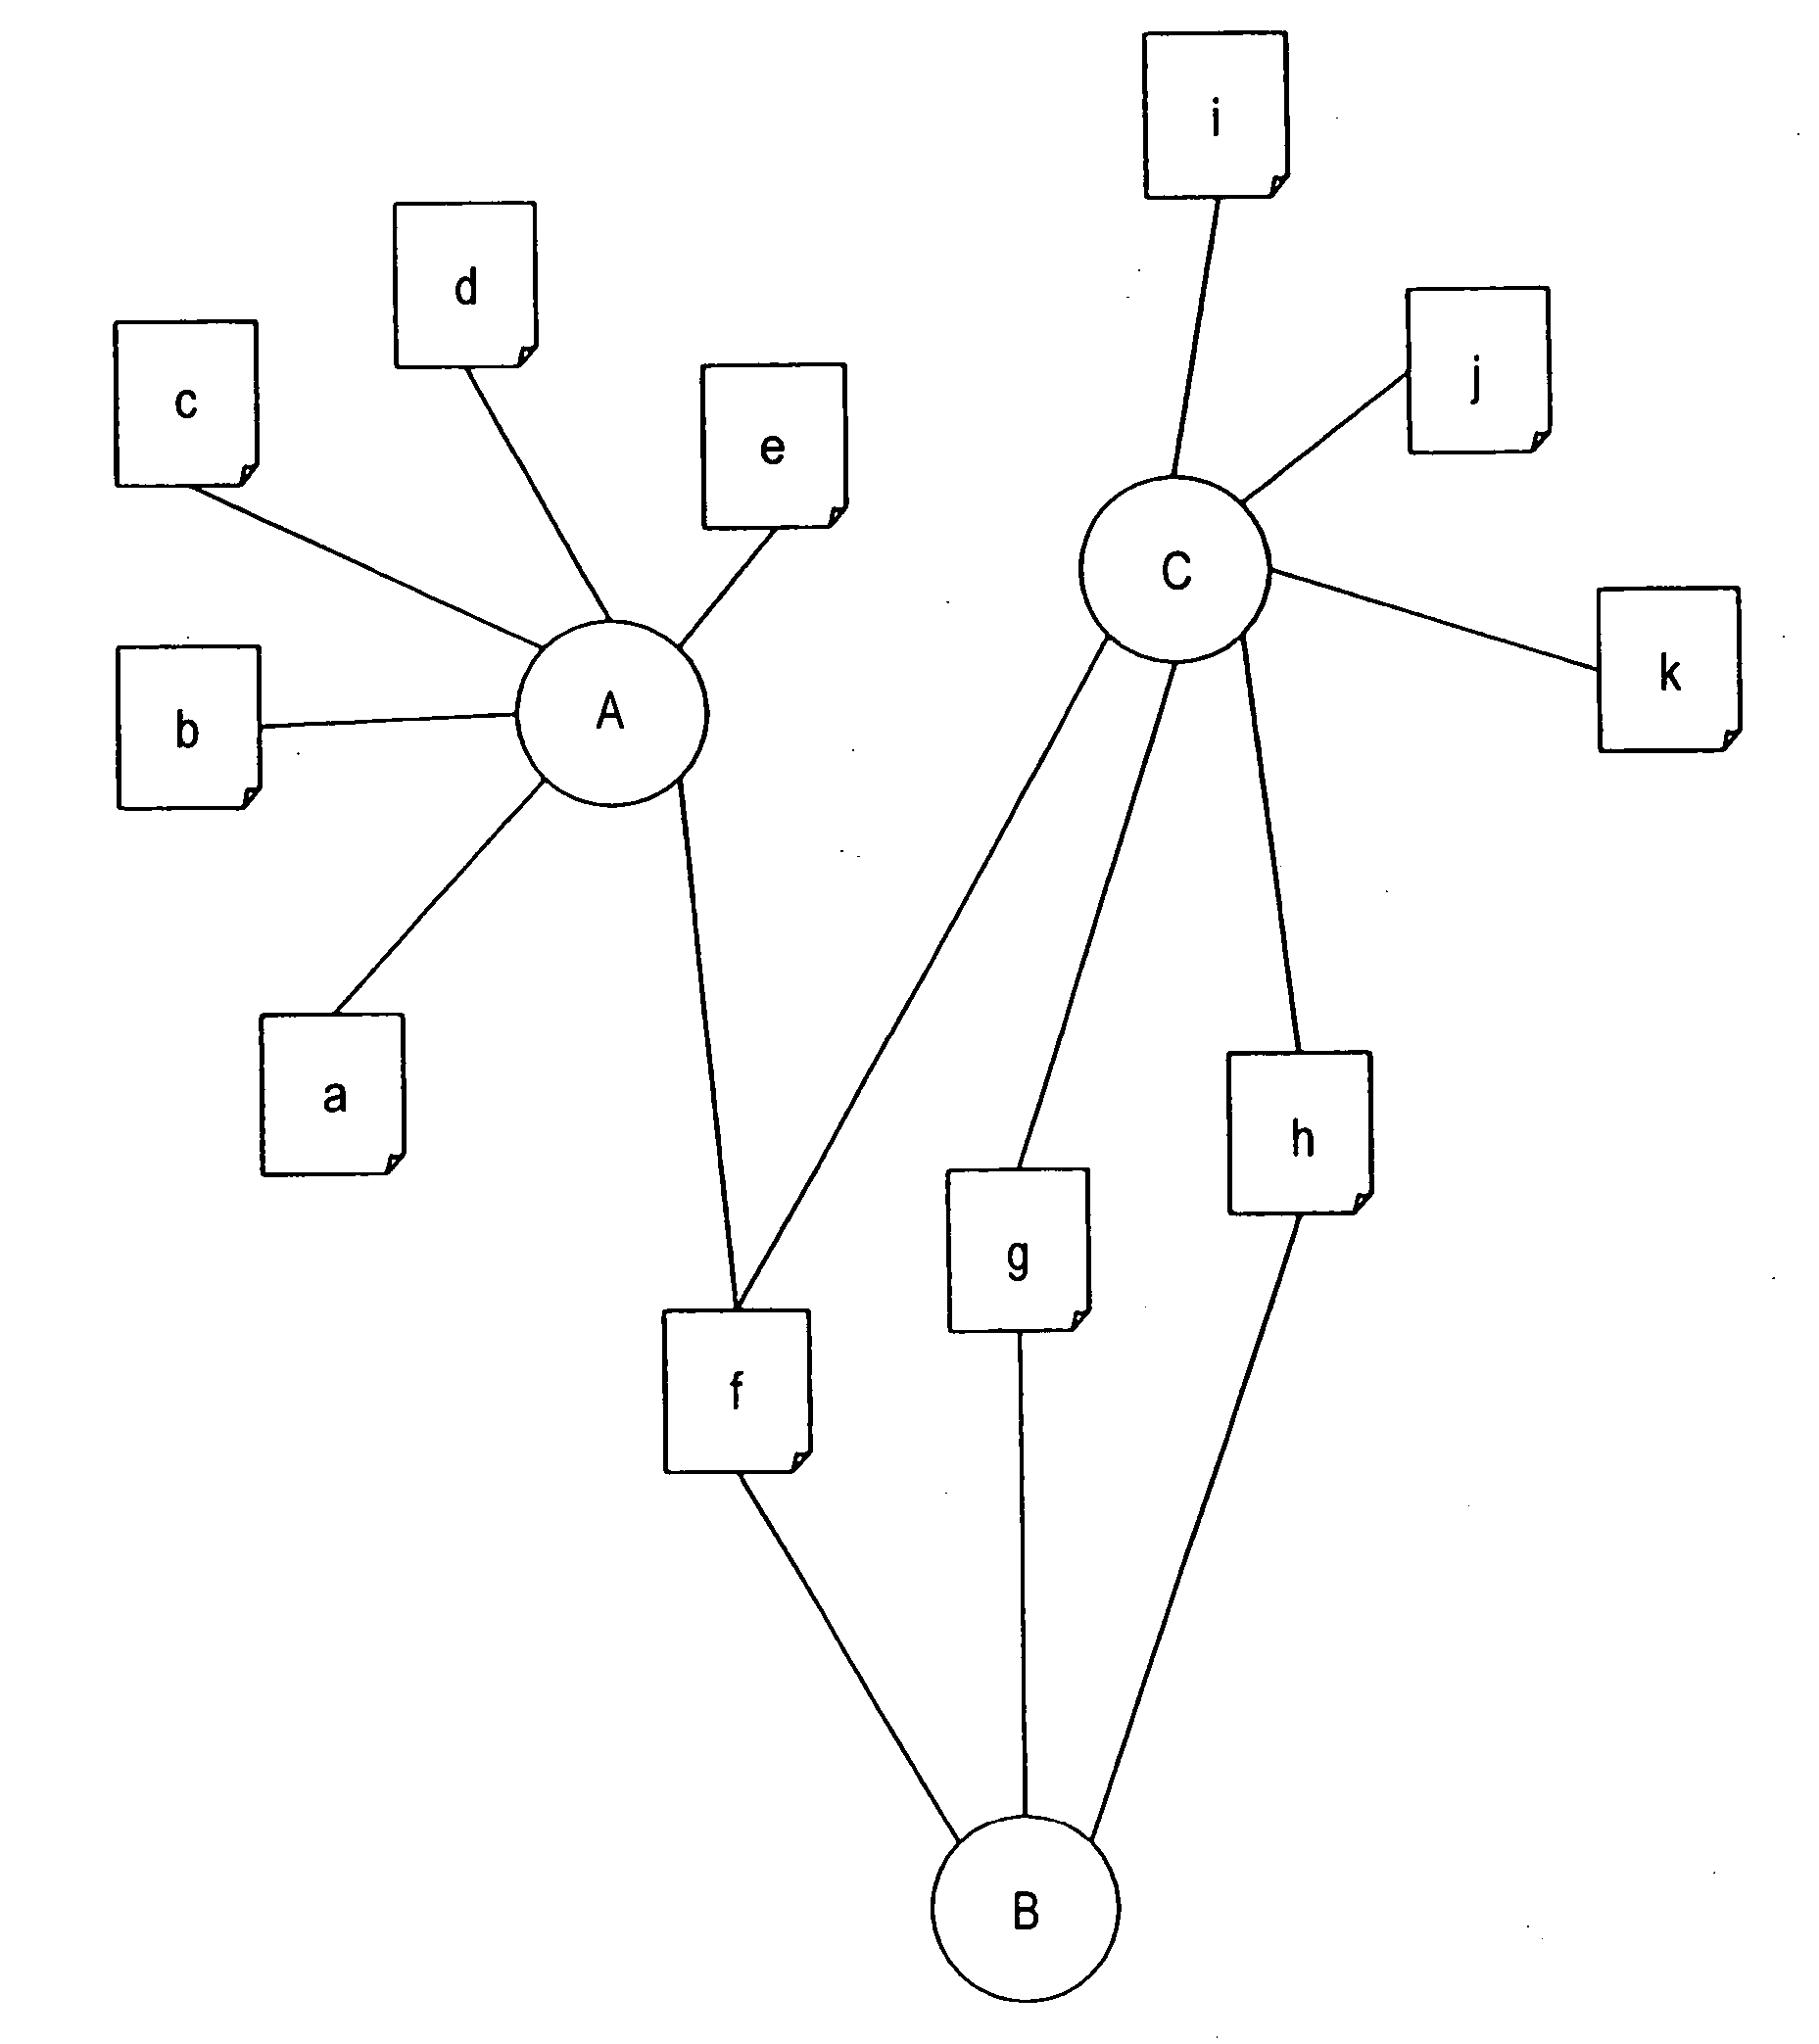 Link relationship display apparatus, and control method and program for the link relationship display apparatus